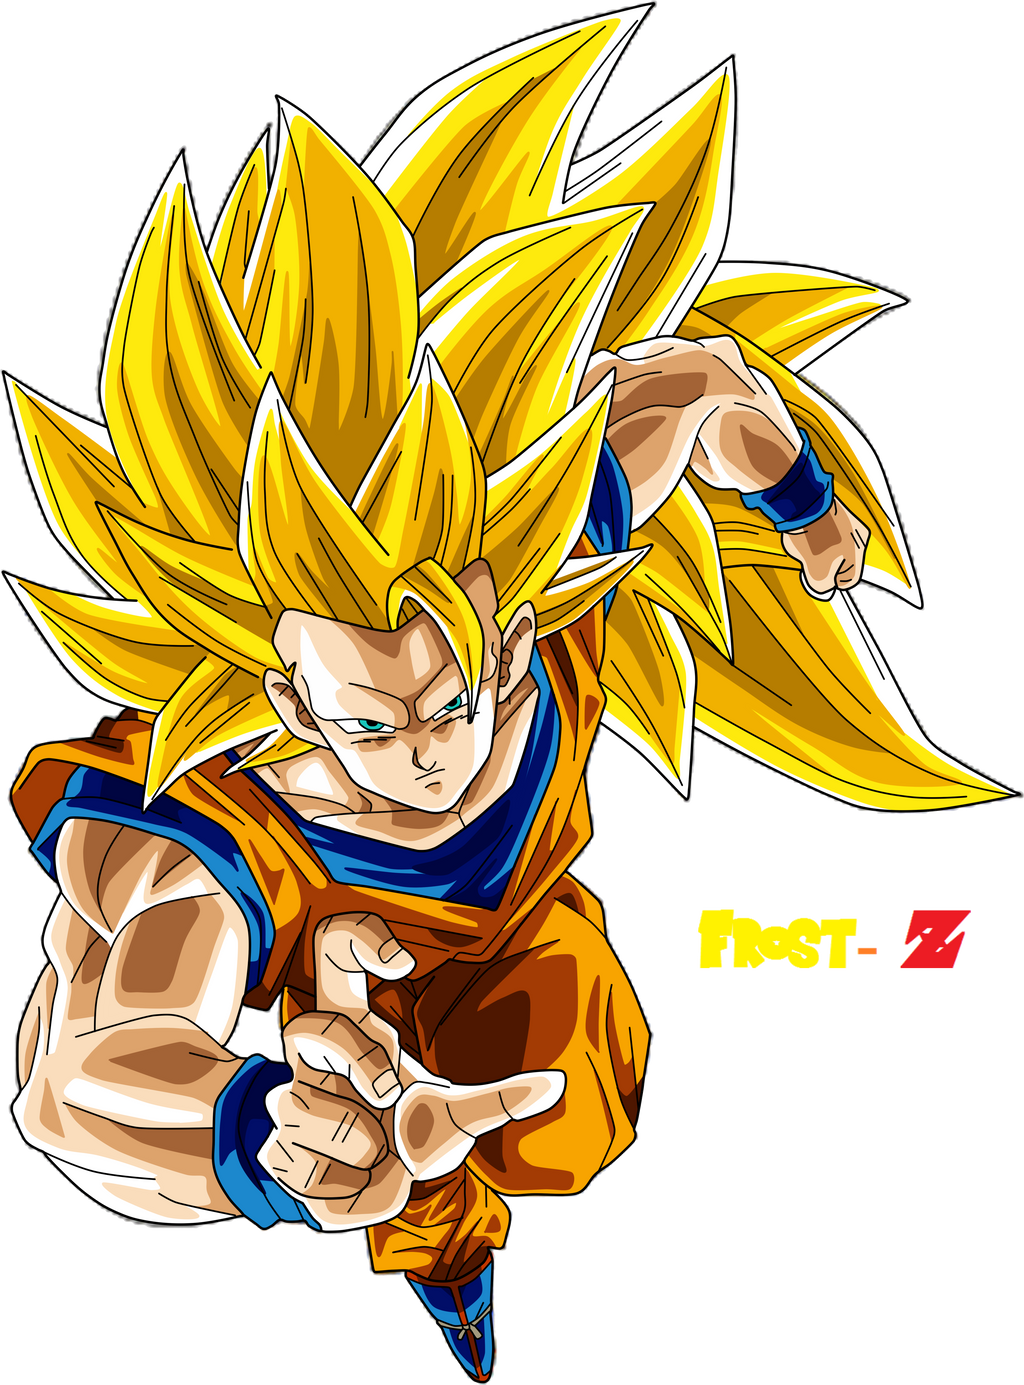 Goku Super Saiyan 3 by ChronoFz on DeviantArt